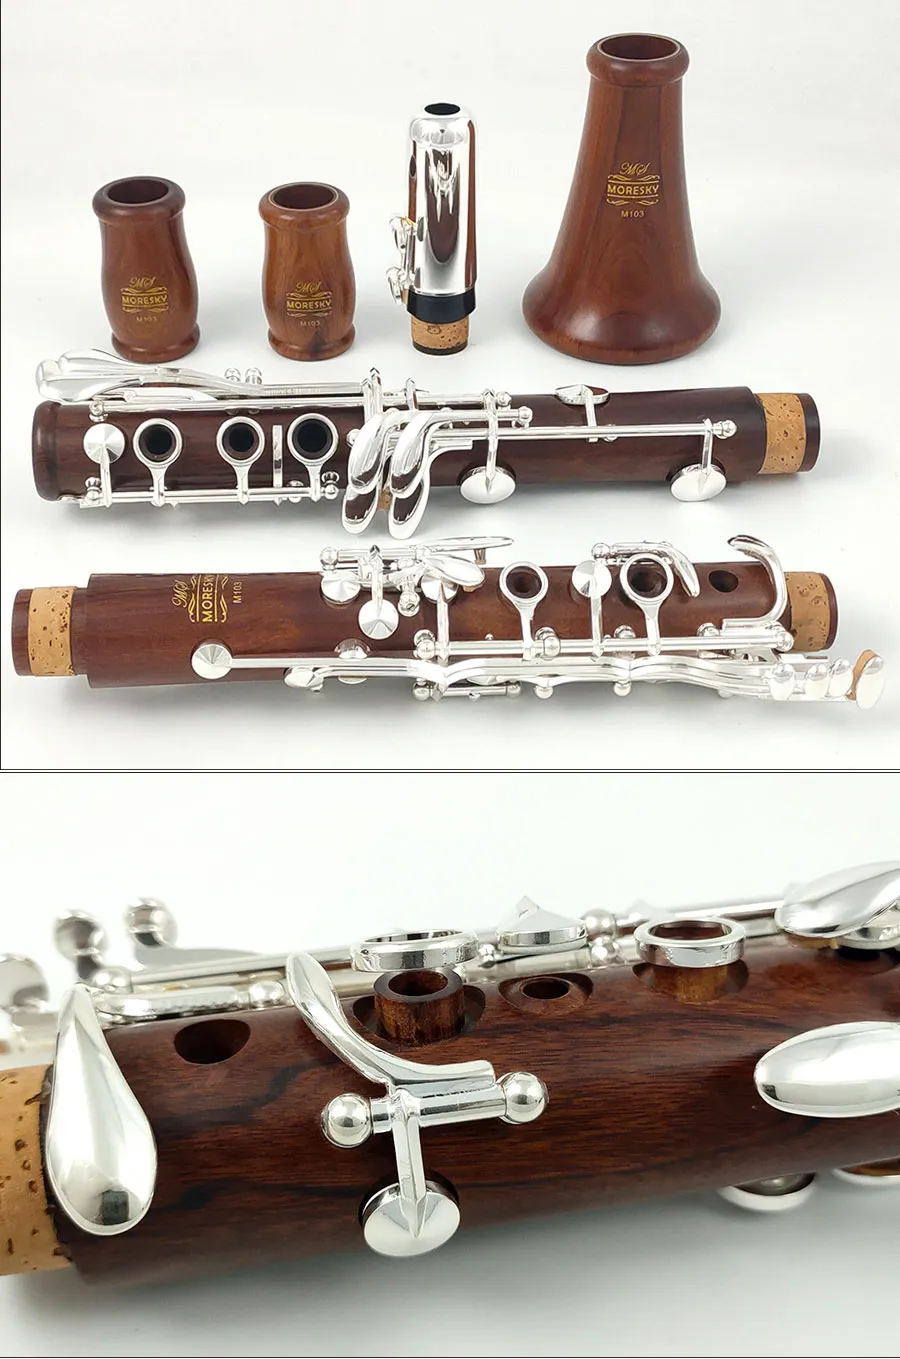 Moresky Clarinet BB Rosewood/Mopane Silvering Keys Sib Klarnet M103